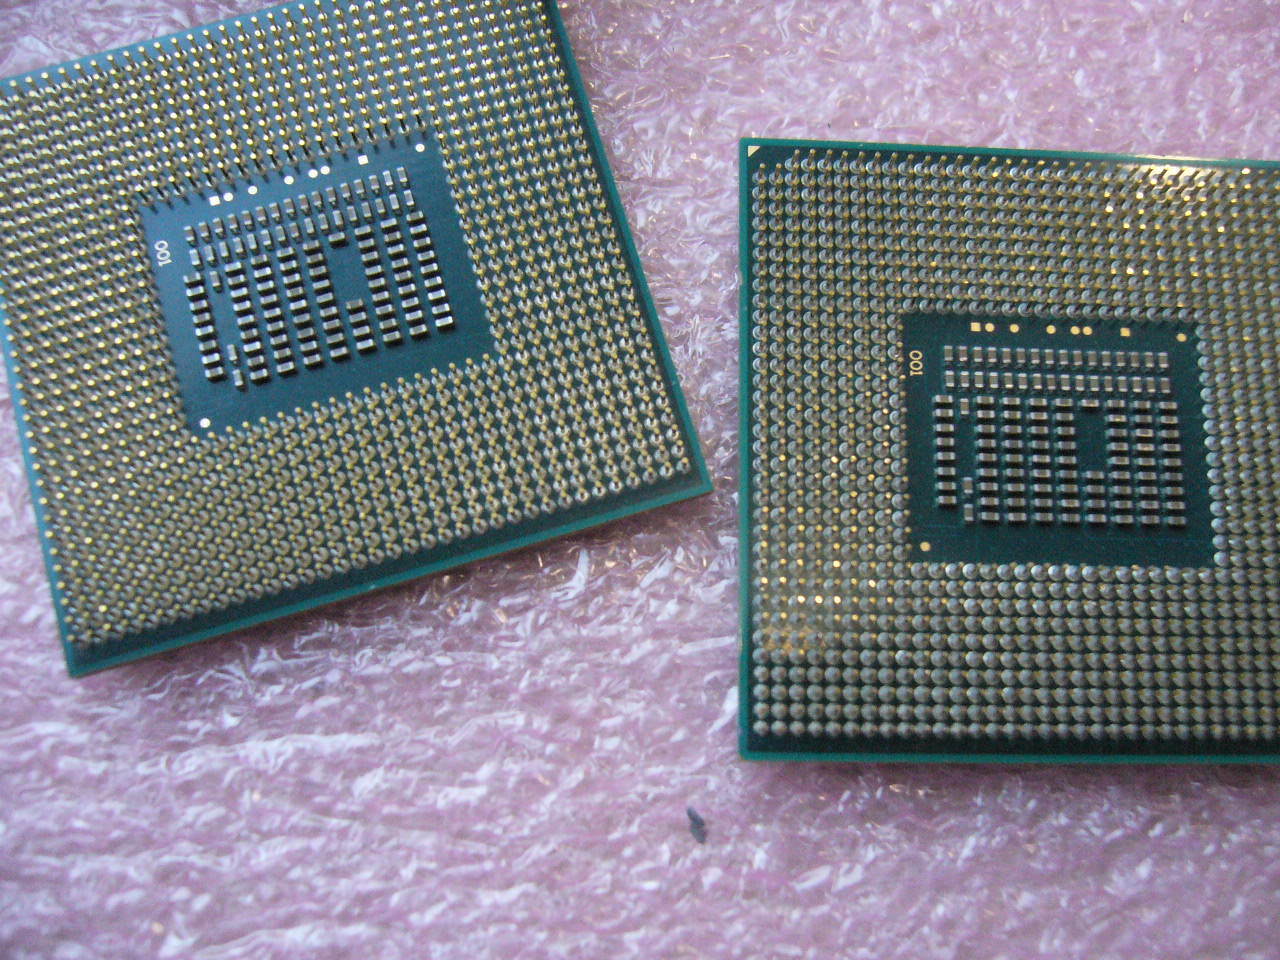 QTY 1x Intel CPU i5-3230M Dual-Core 2.6 Ghz PGA988 SR0WY Socket G2 NOT WORKING - Click Image to Close